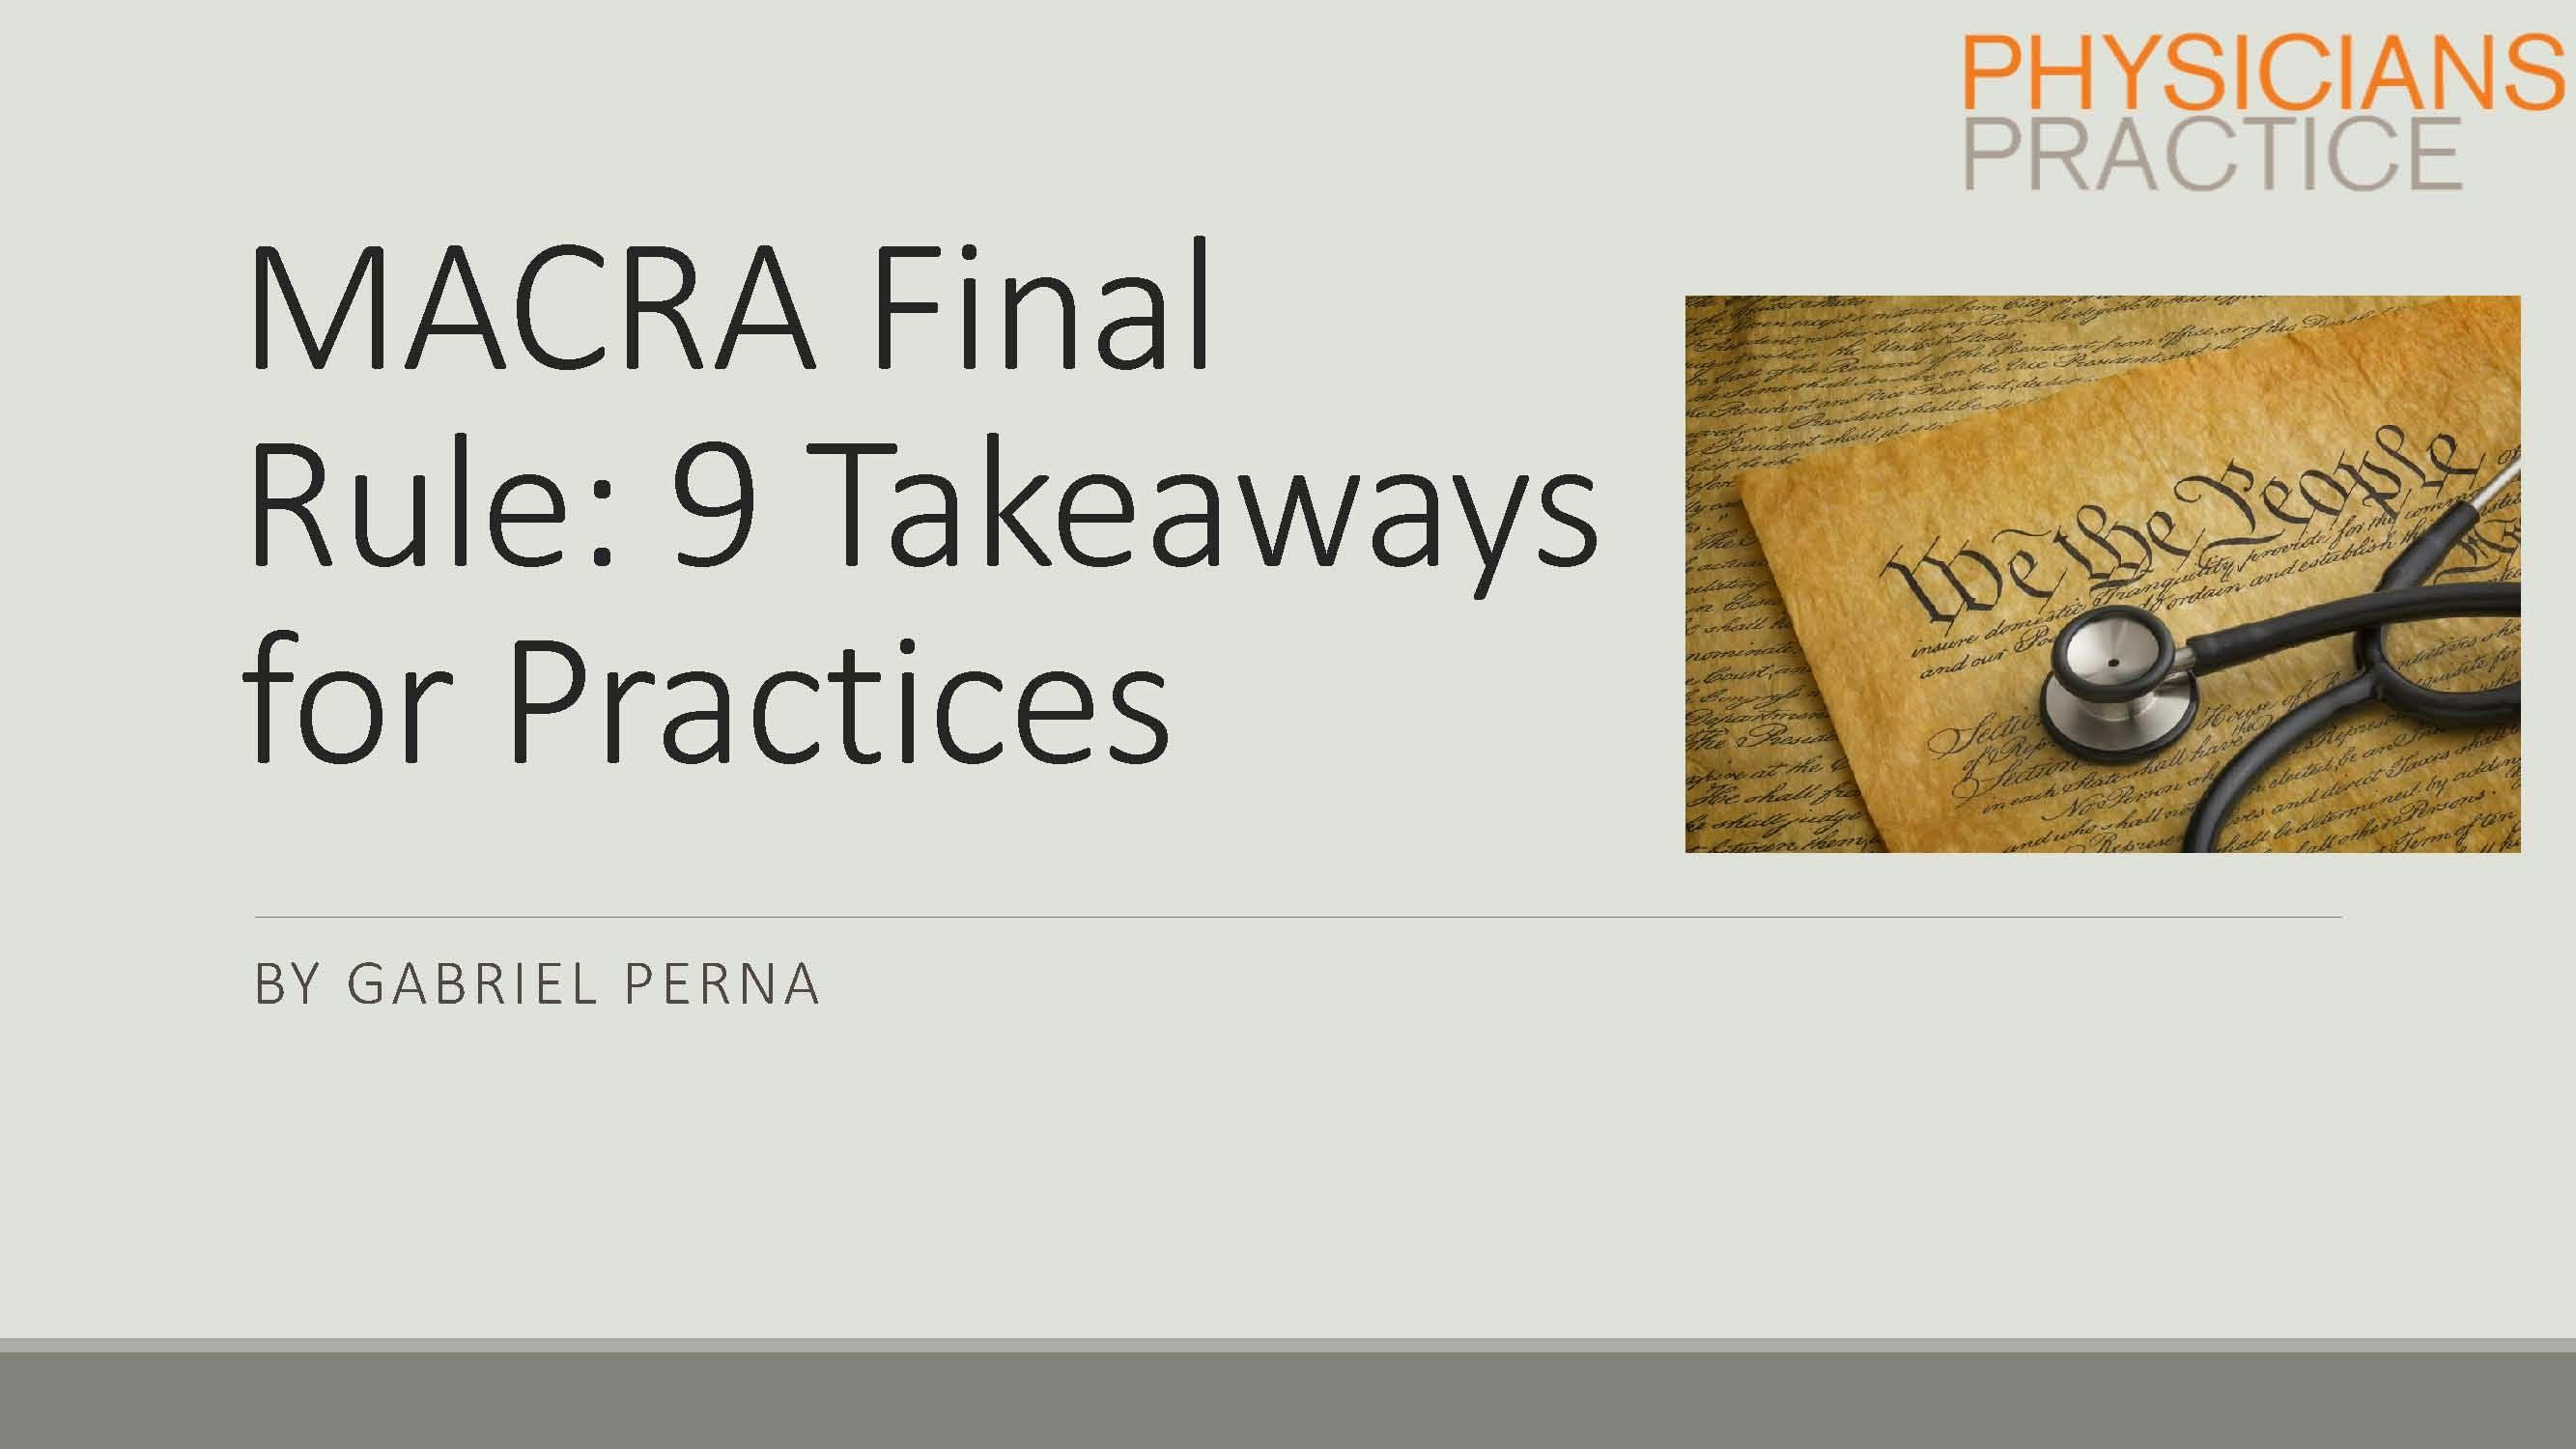 MACRA Final Rule: 9 Takeaways for Practices